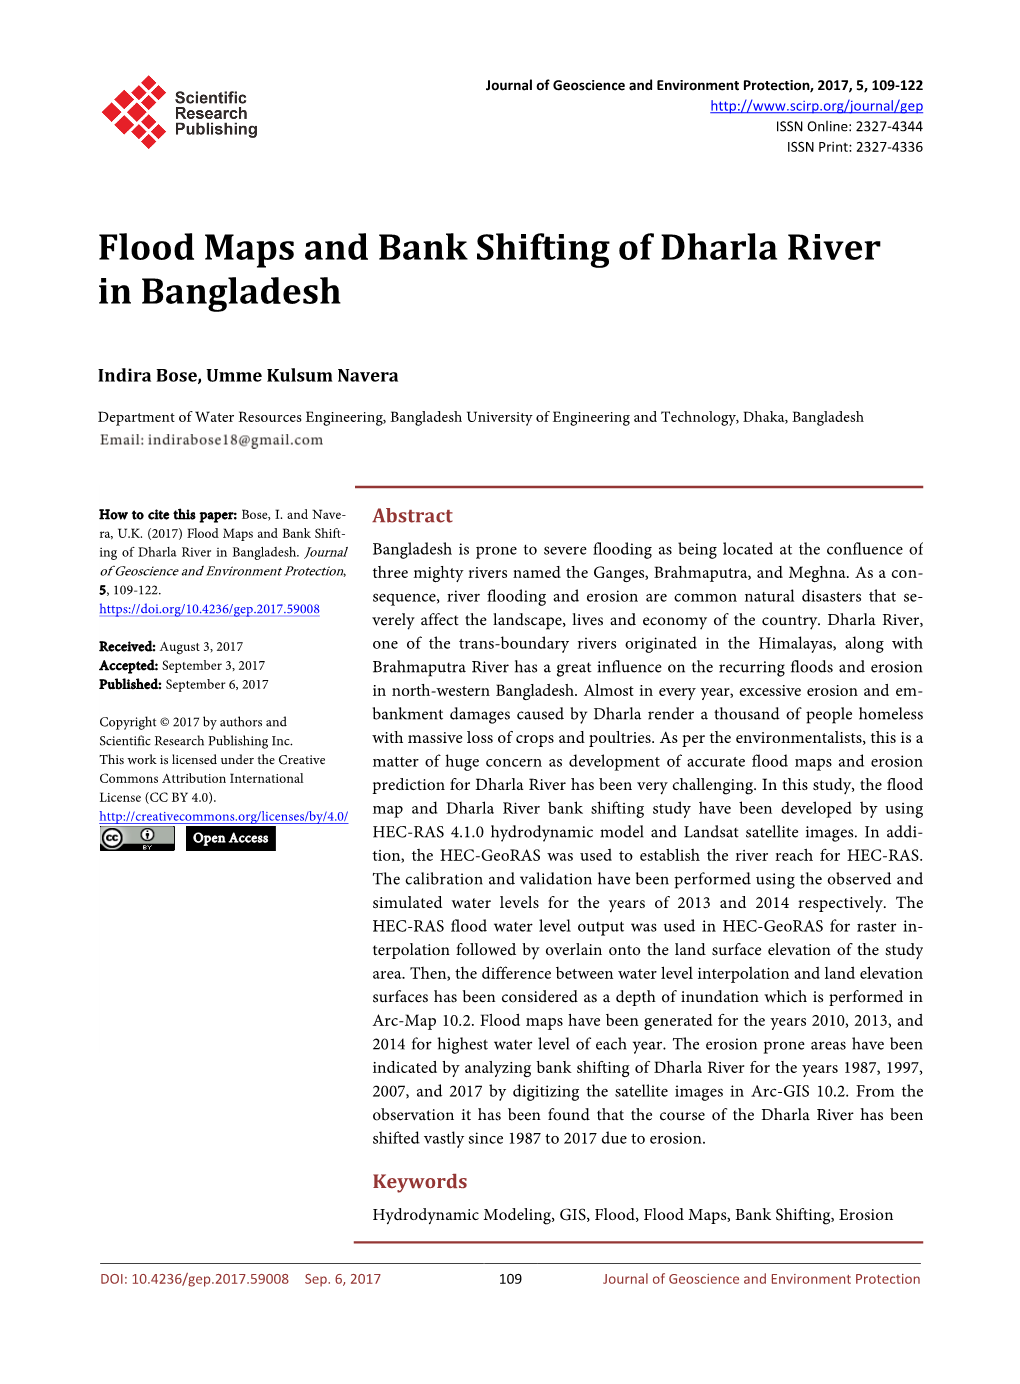 Flood Maps and Bank Shifting of Dharla River in Bangladesh